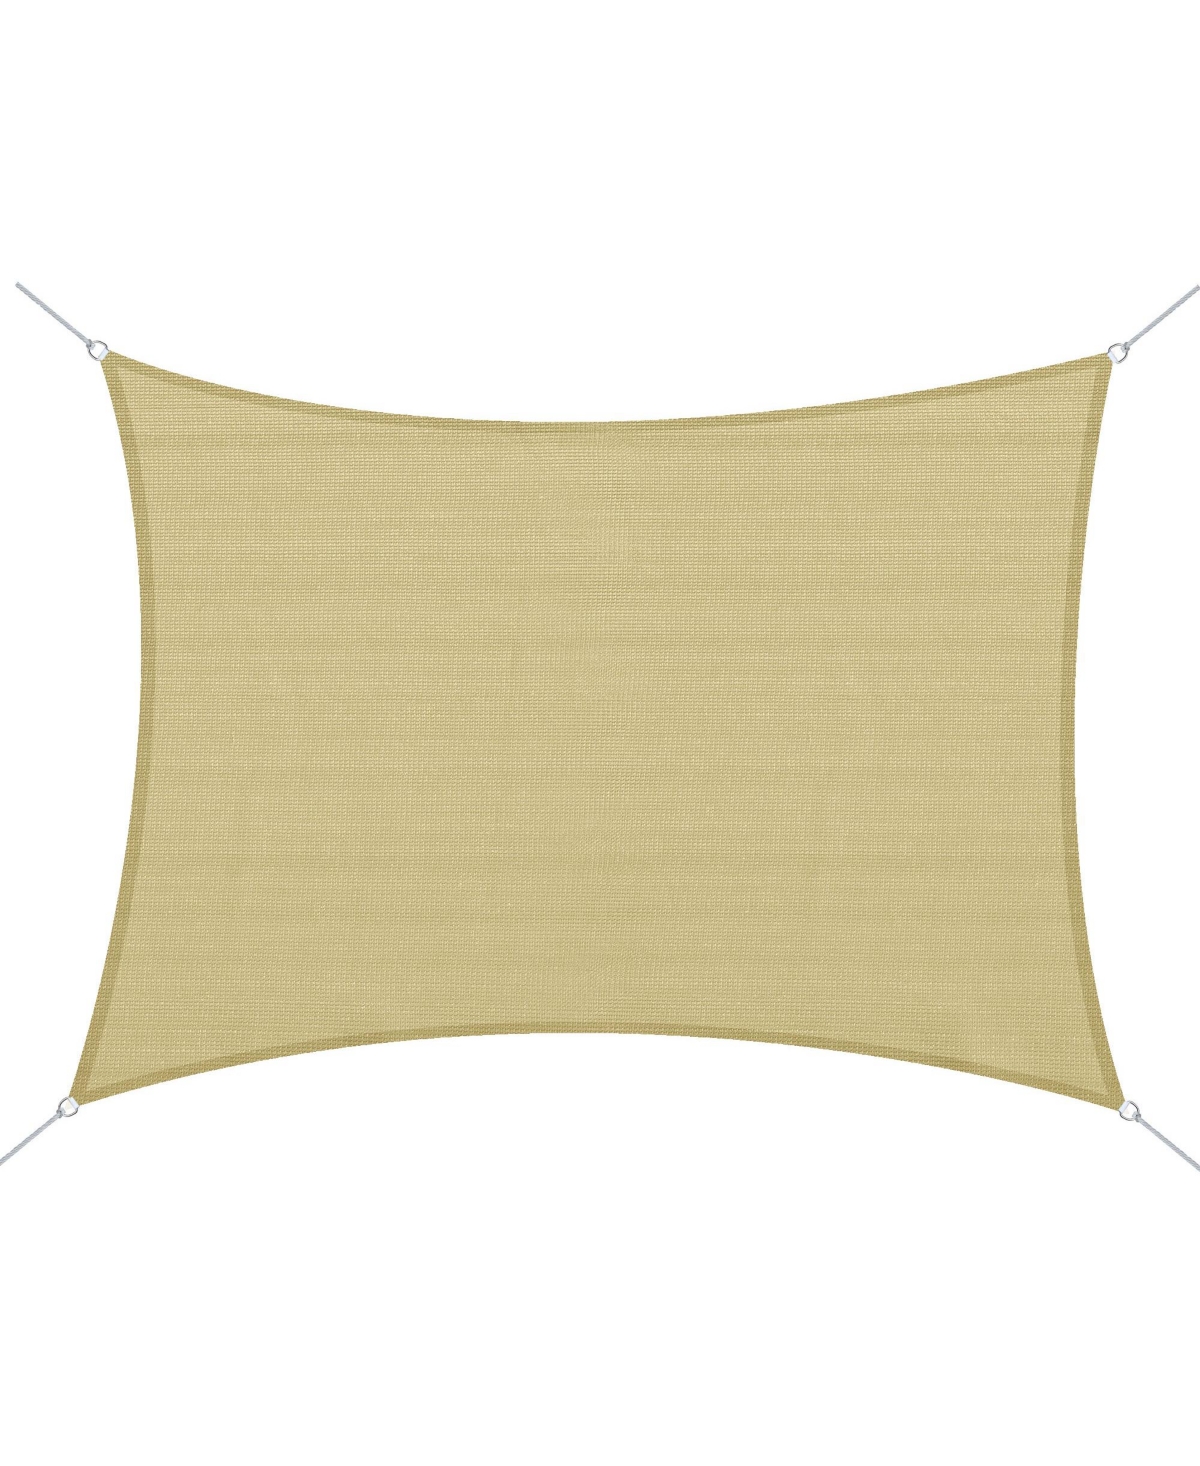 20' x 16' Rectangle Sun Sail Shade Canopy Shade Sail Cloth for Outdoor Patio Deck Yard, Sand - Sand